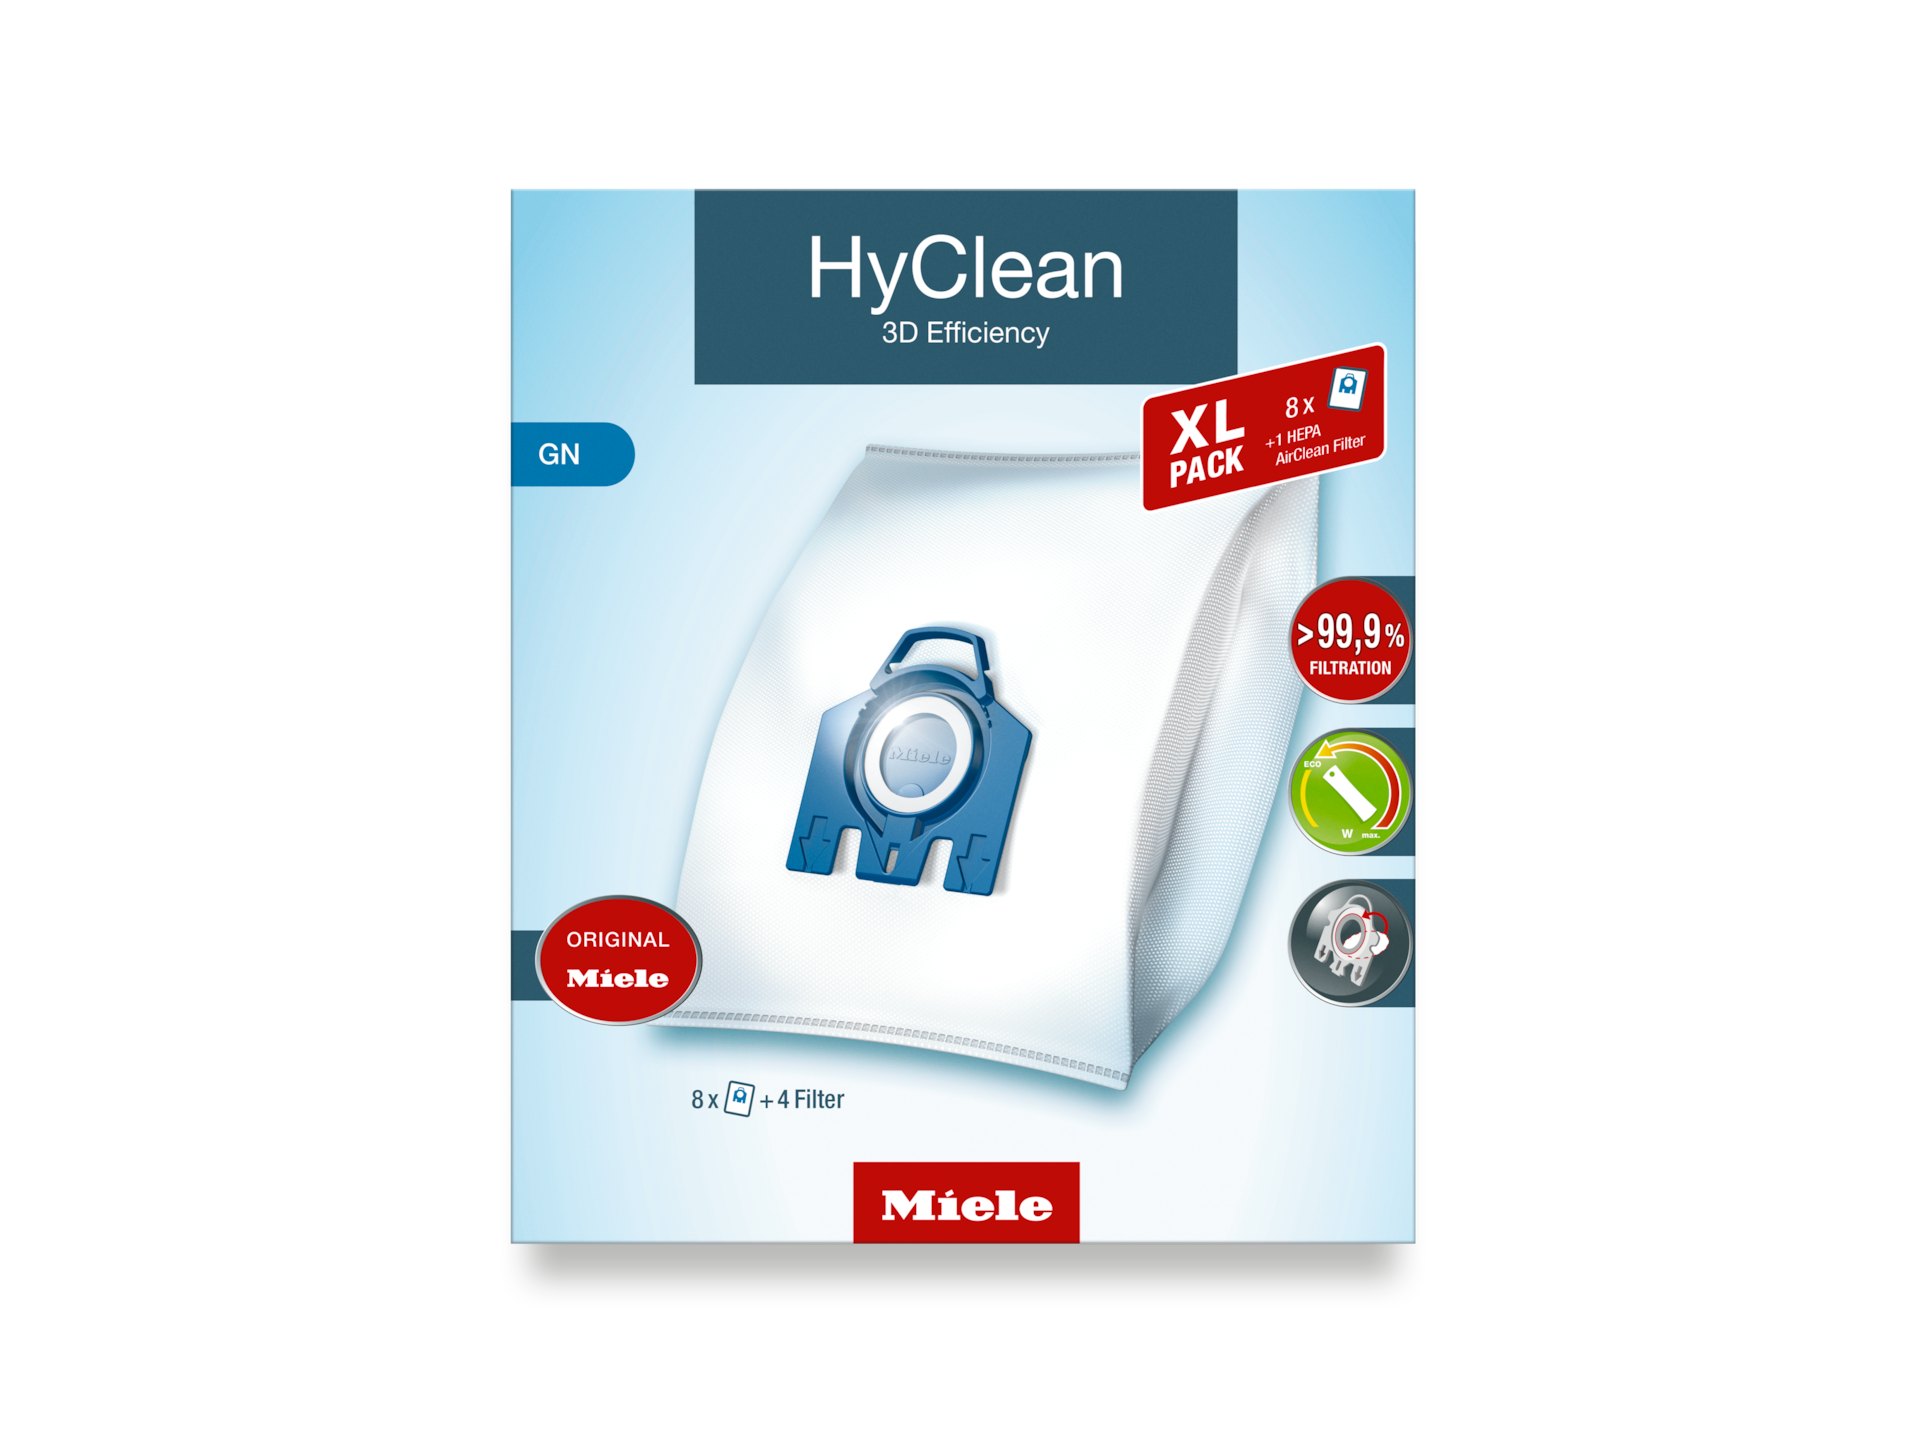 Accessoires - GN Allergy XL HyClean 3D - 1